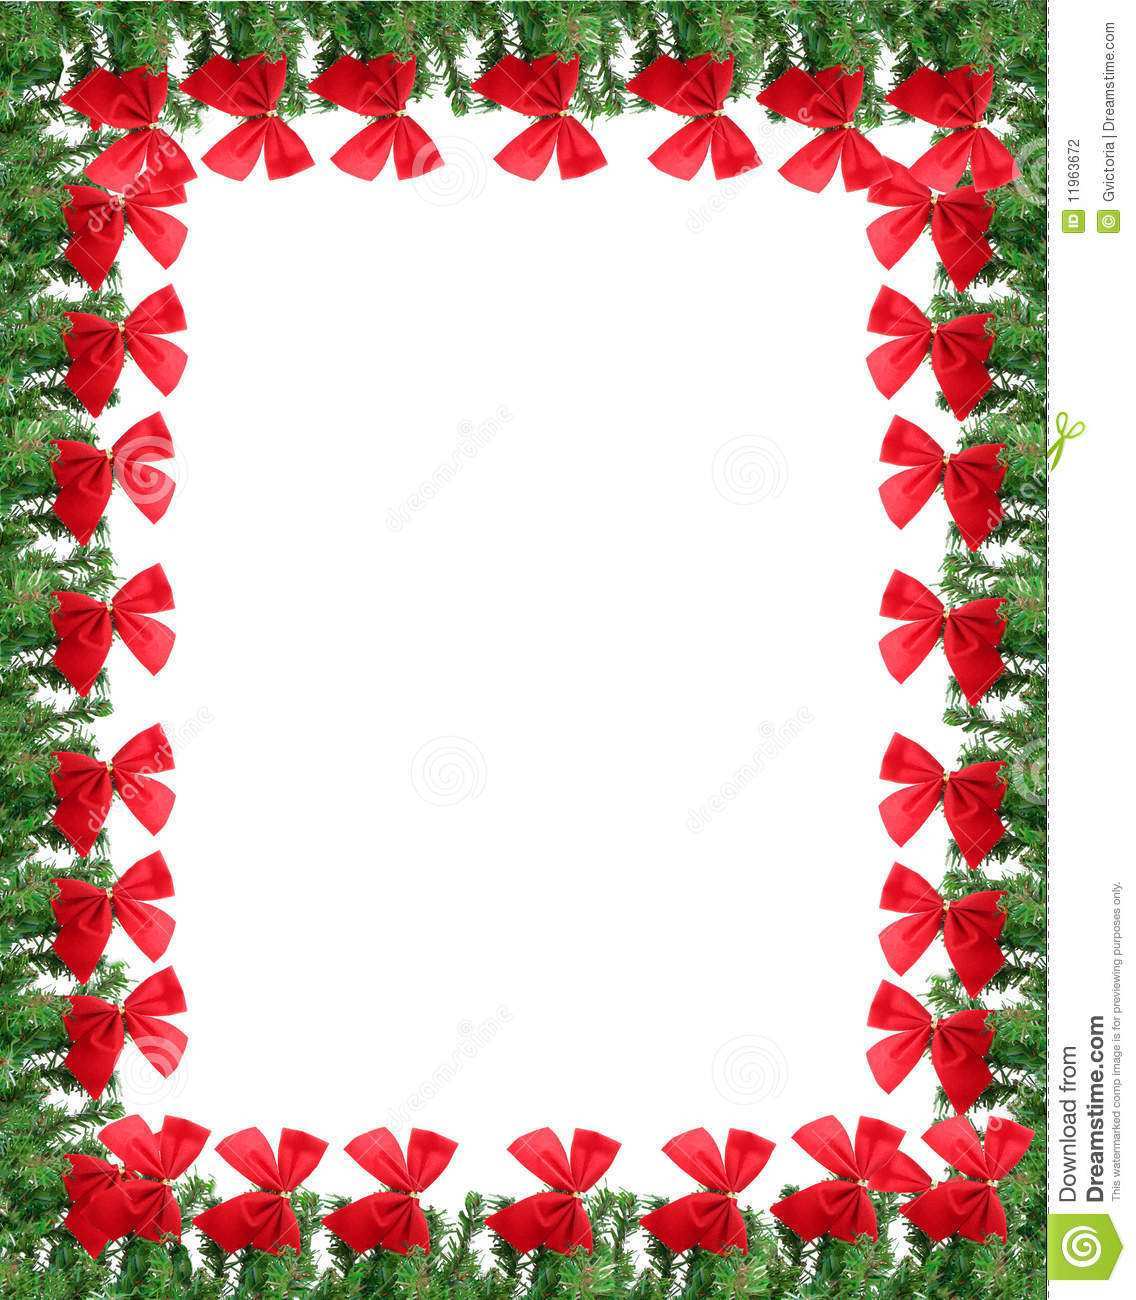 36 Visiting Christmas Card Insert Templates Photo with Christmas Card Insert Templates